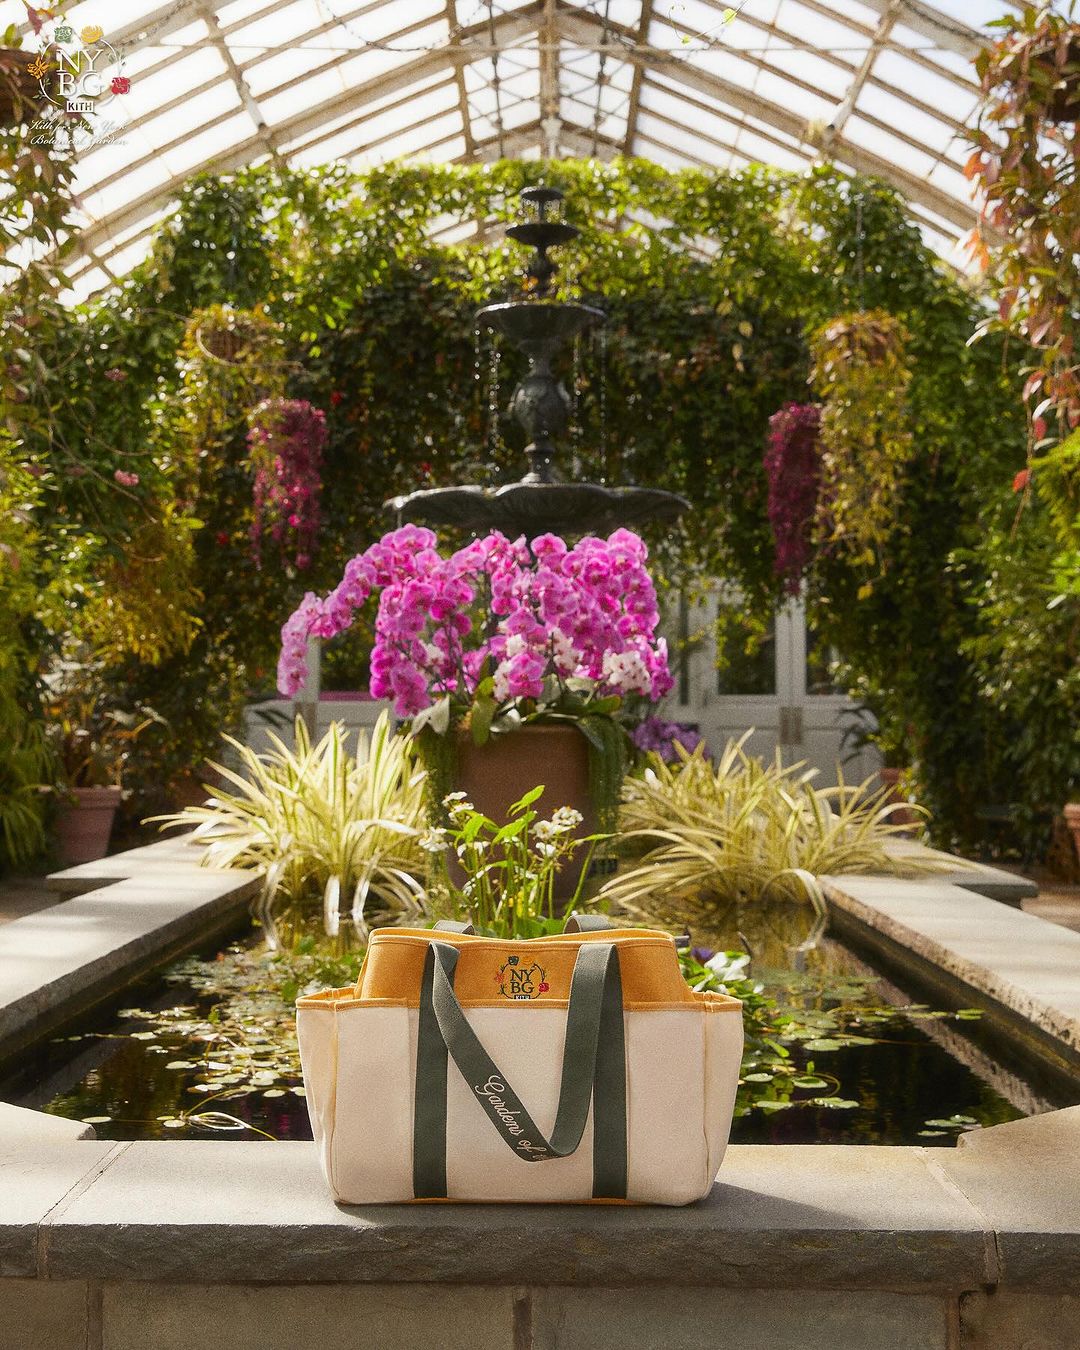 【Kith for New York Botanical Garden】KITH MONDAY PROGRAM 2024年 3/25 発売 (キス ニューヨーク ボタニカルガーデン)